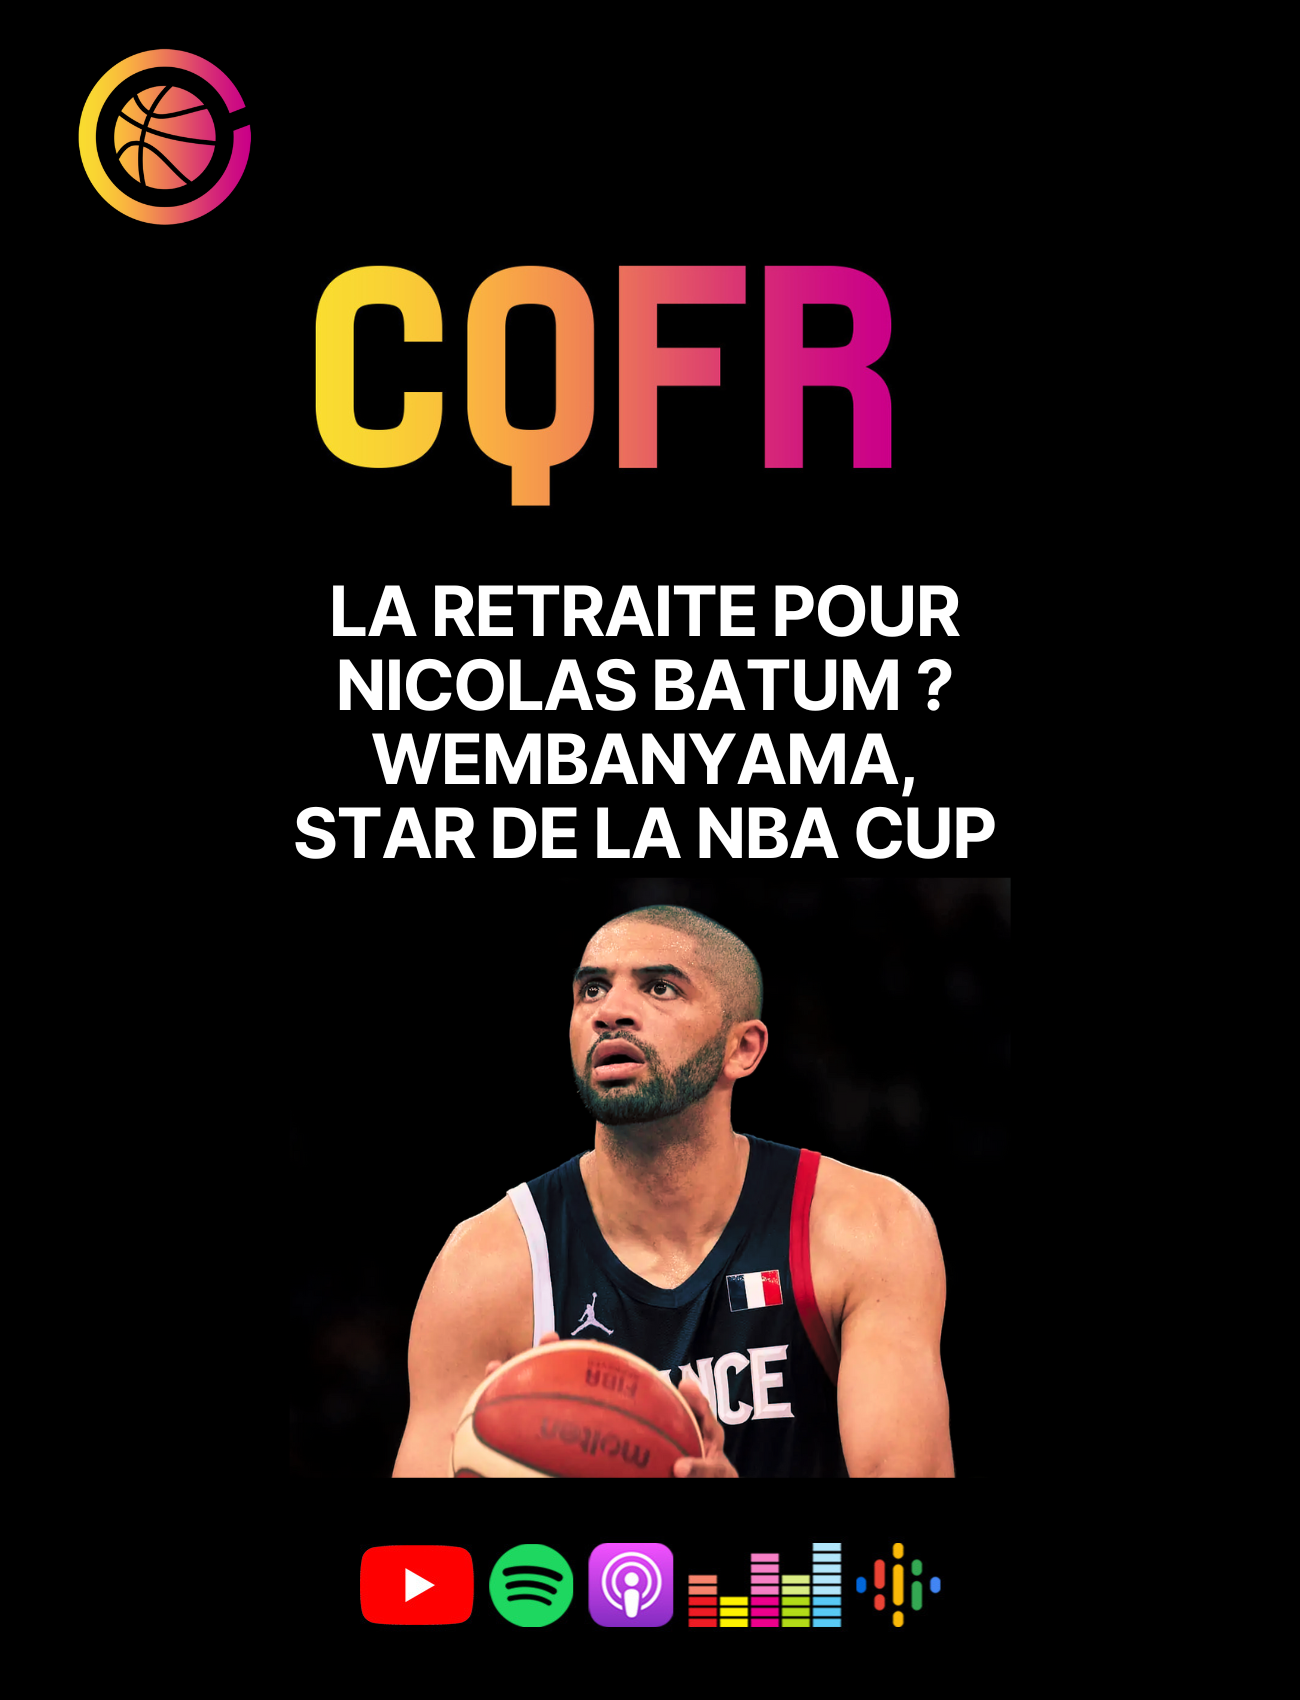 CQFR BasketSession NBA Cup Nicolas Batum